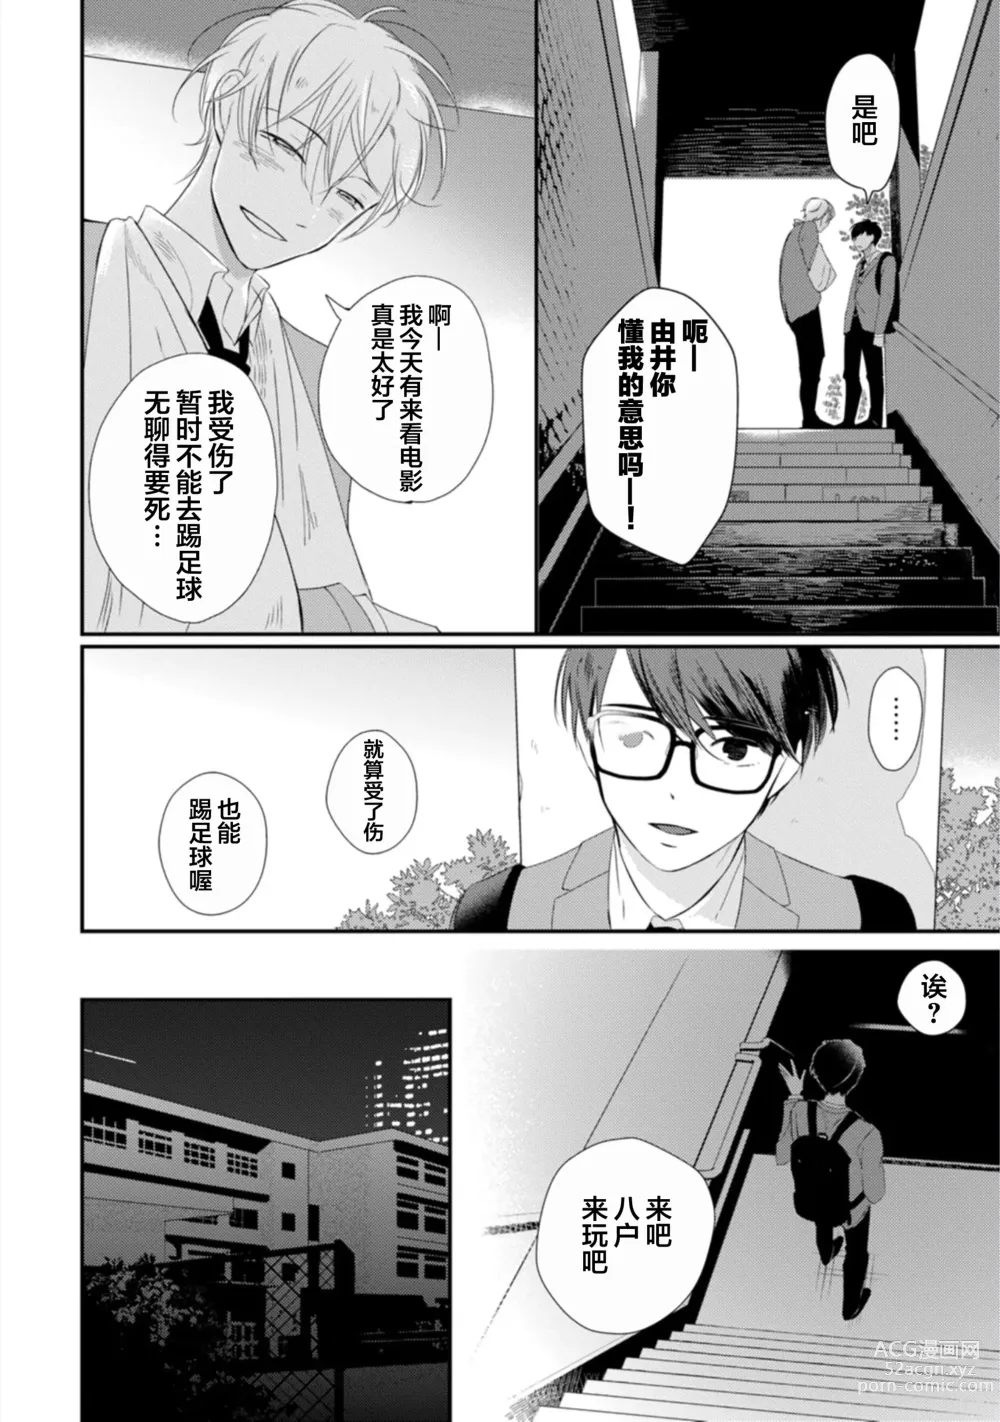 Page 28 of manga 渴望褪下制服